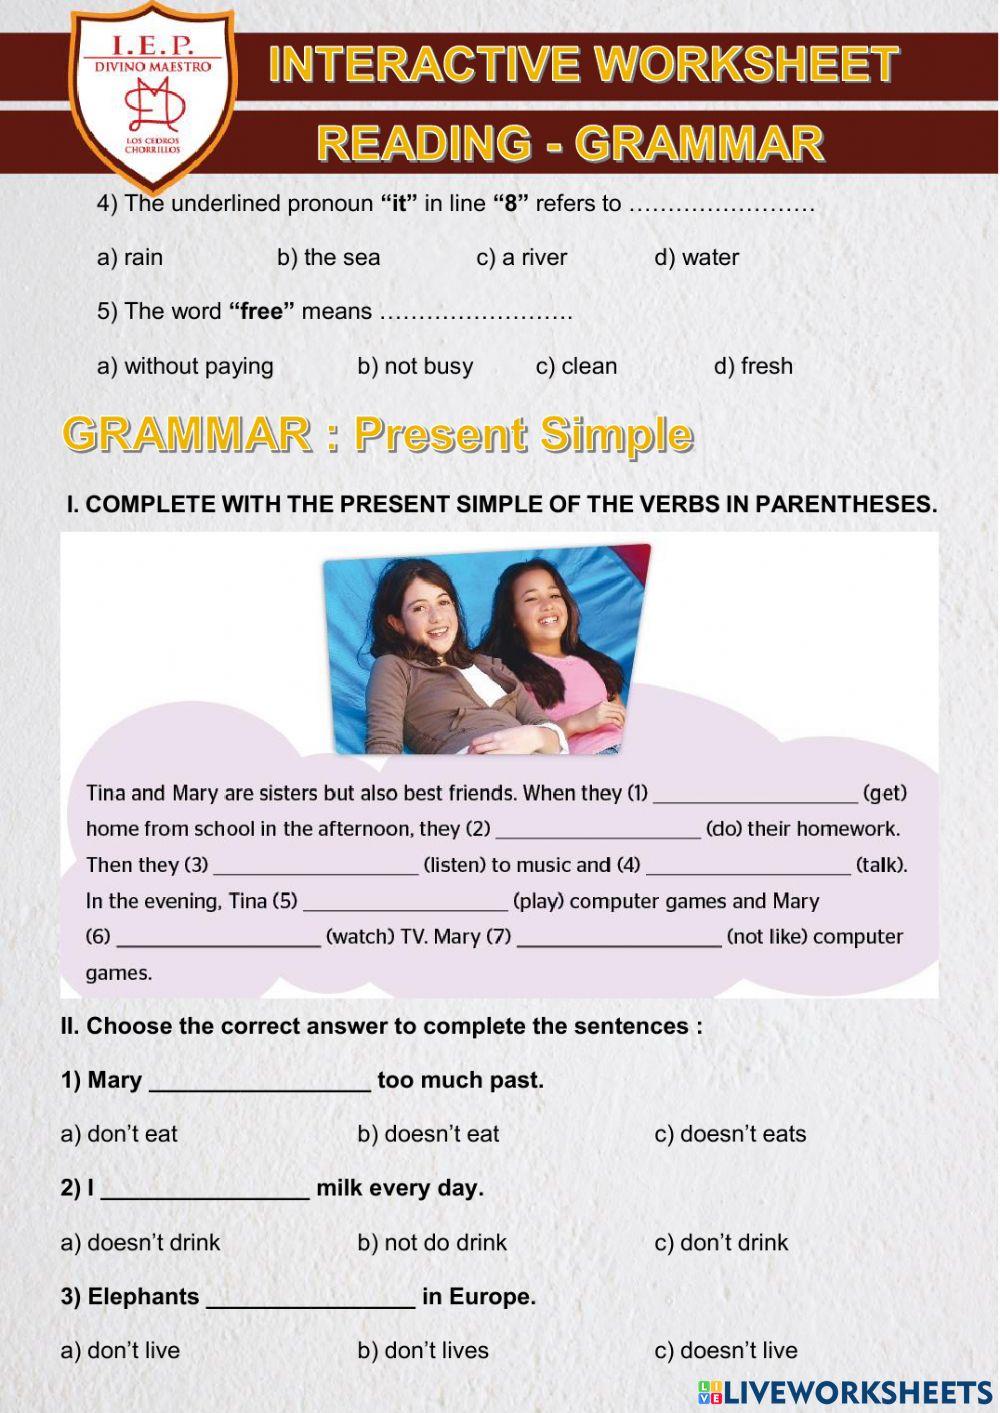 Grammar : present simple